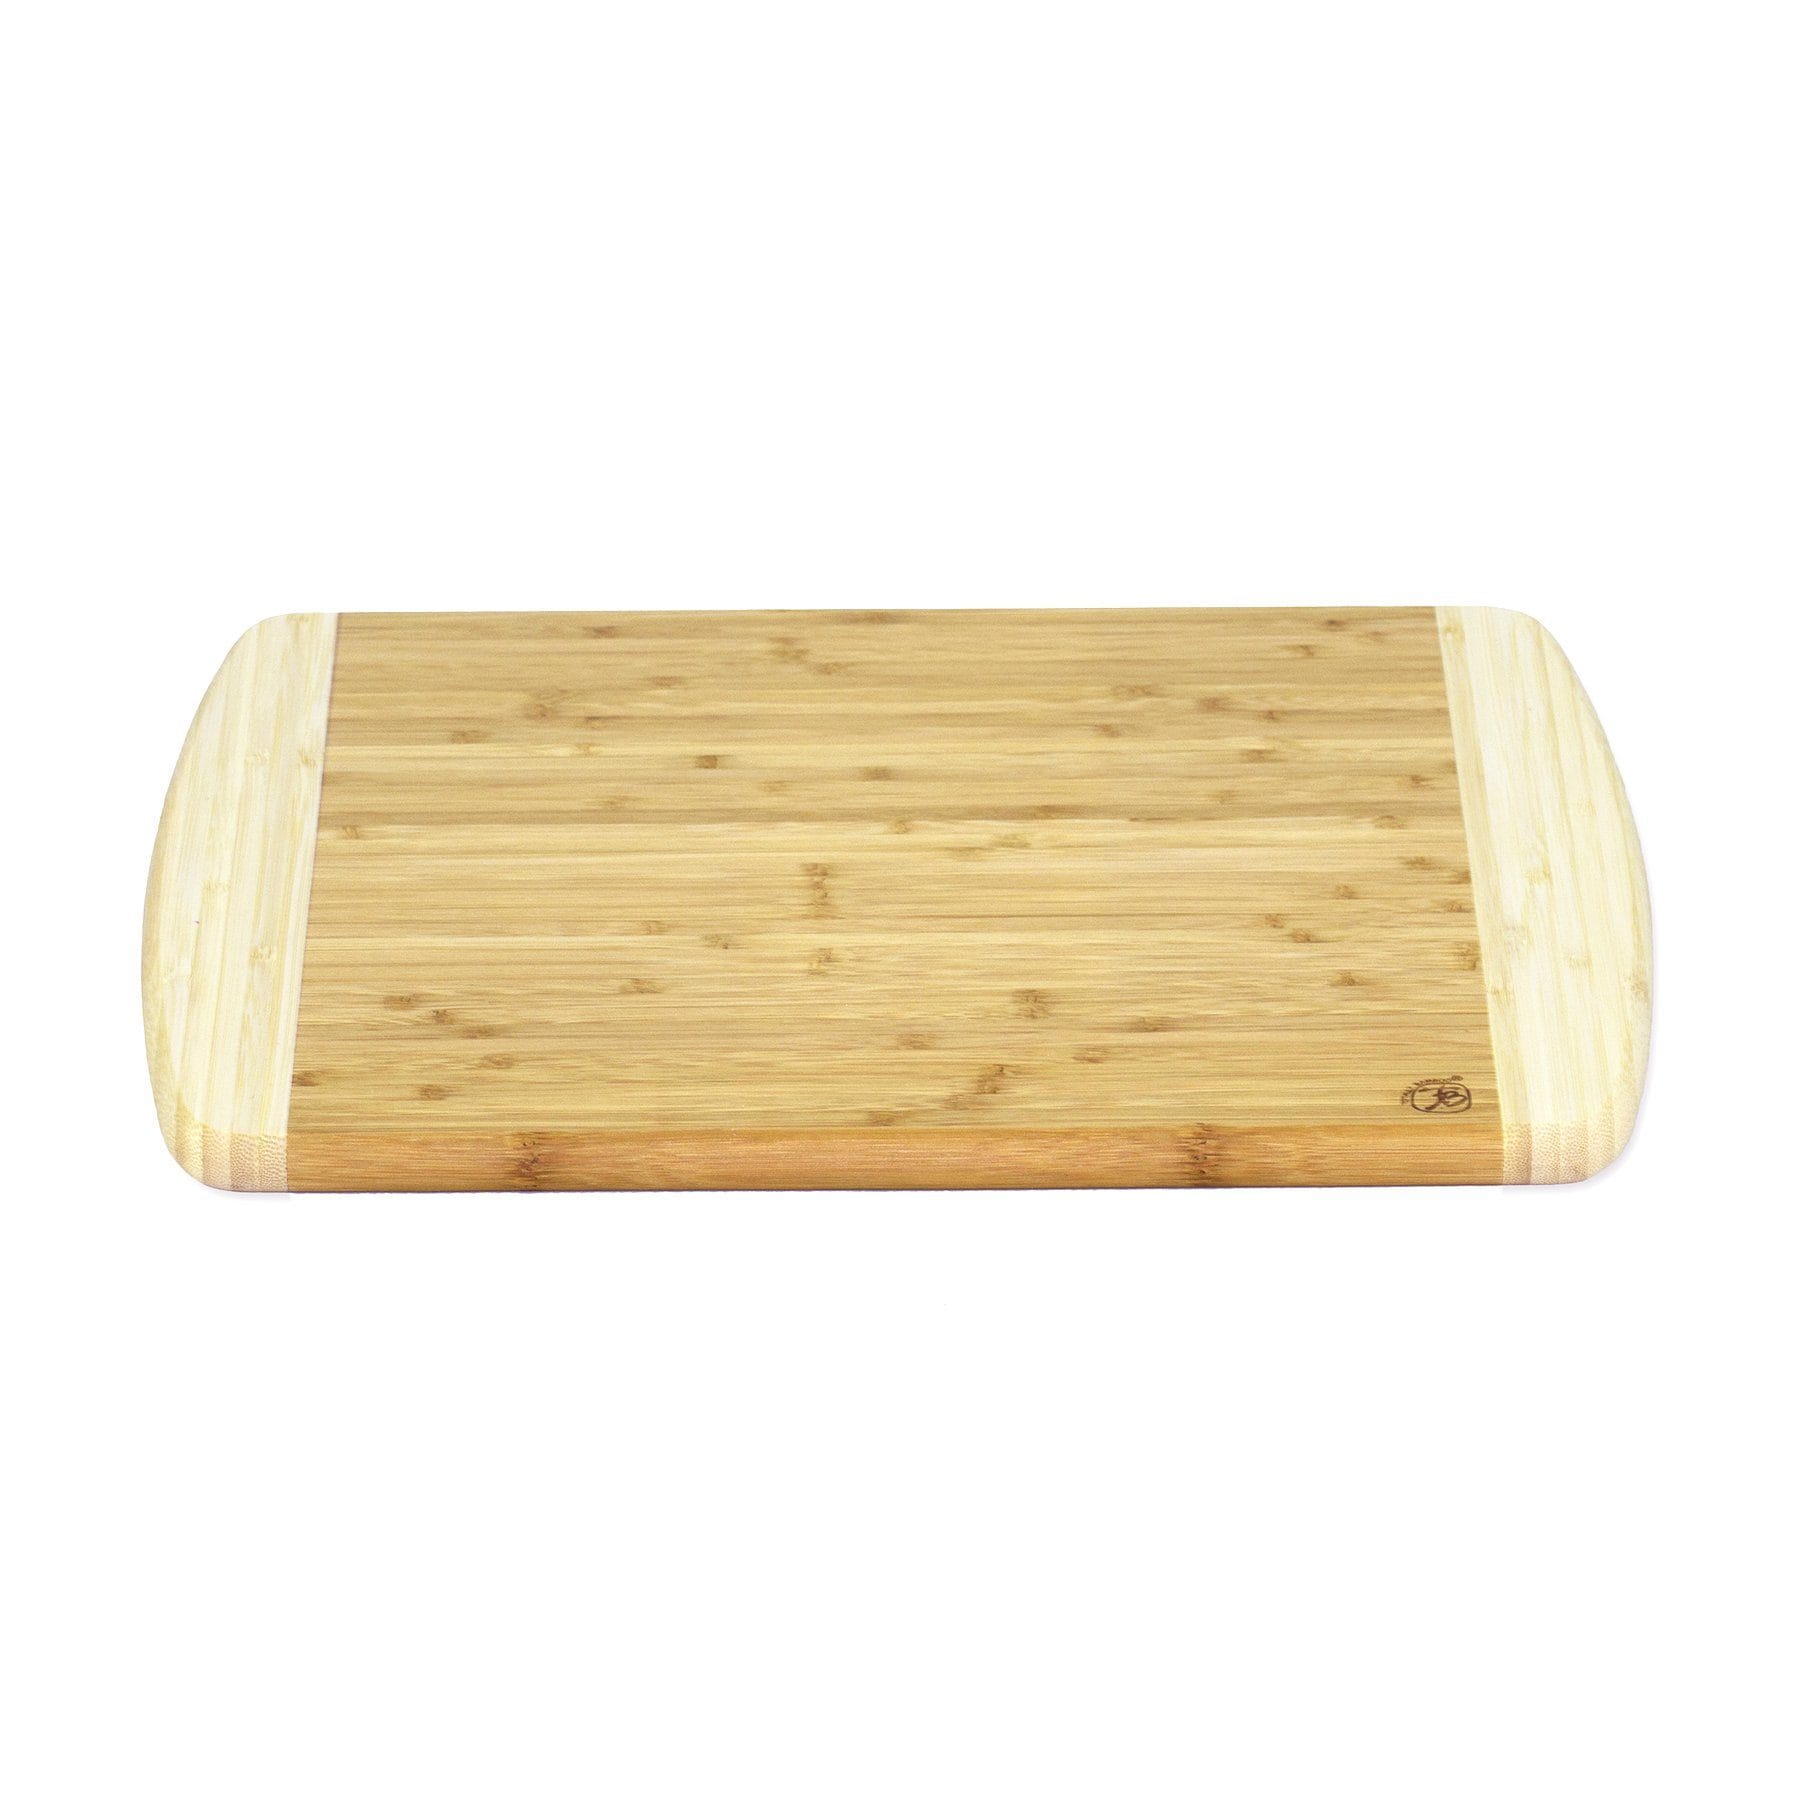 Bambleu: 4-in-1 folding bamboo cutting board saves space in small